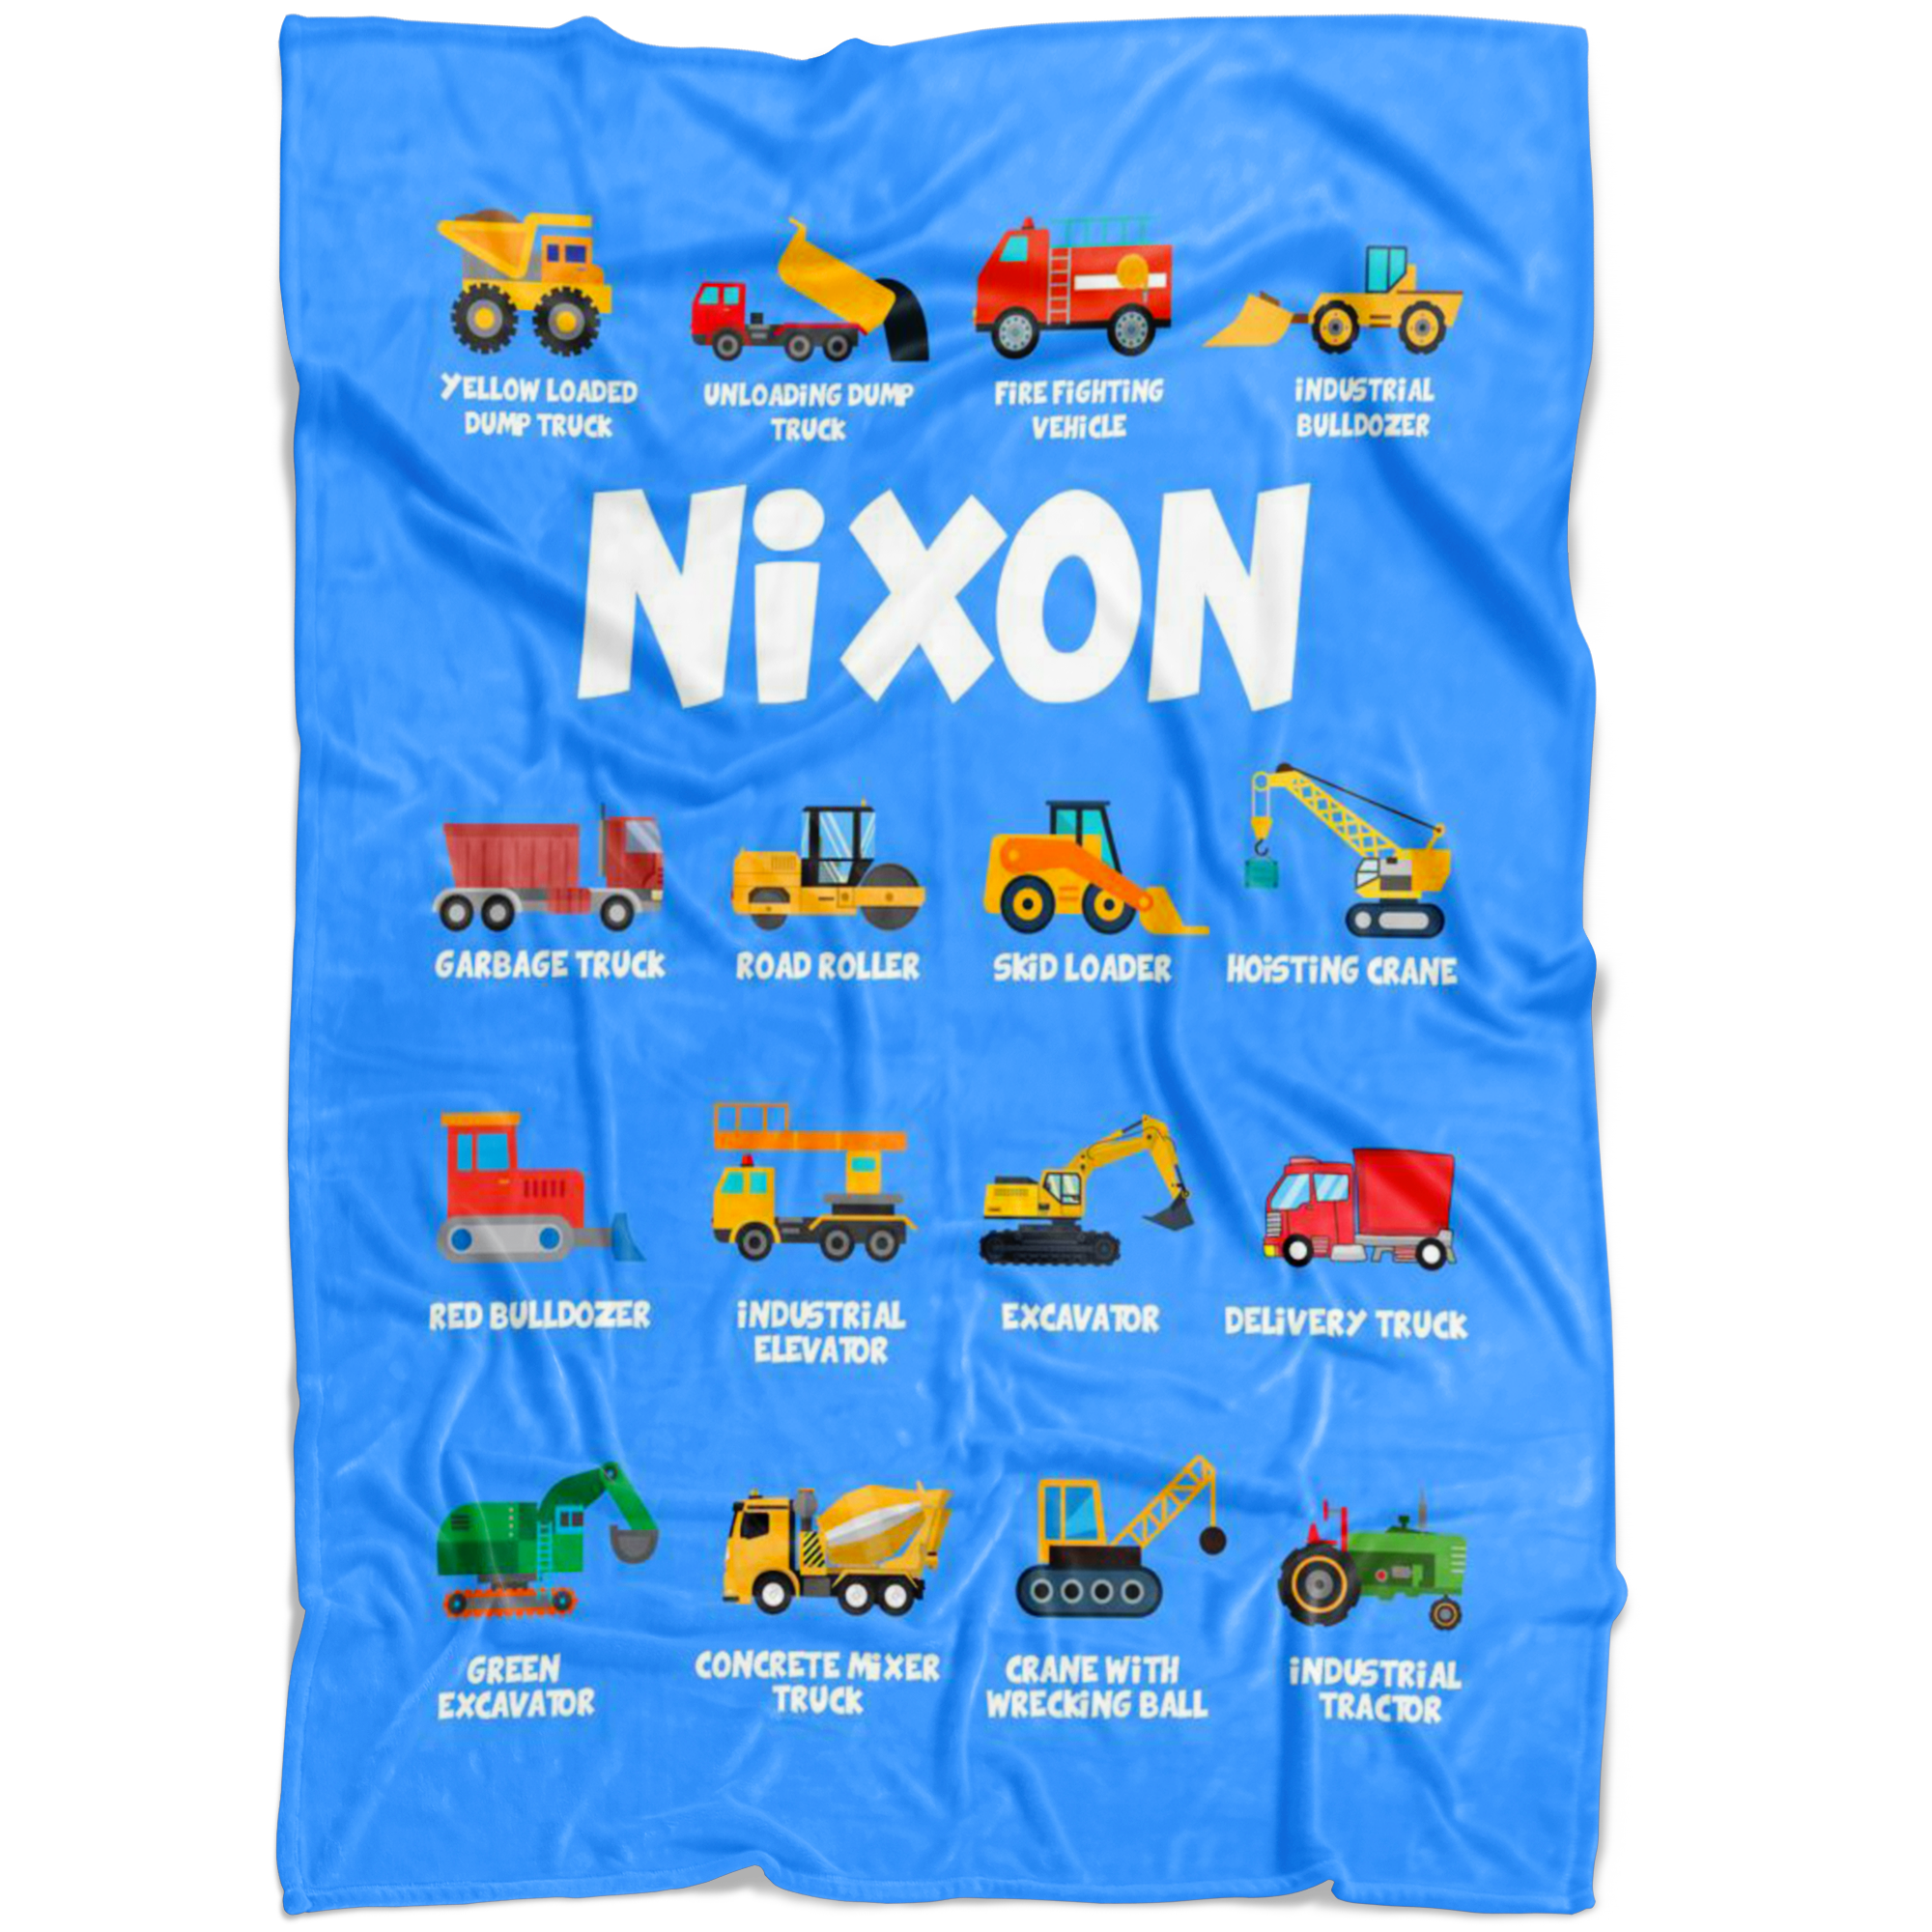 Nixon Construction Blanket Blue